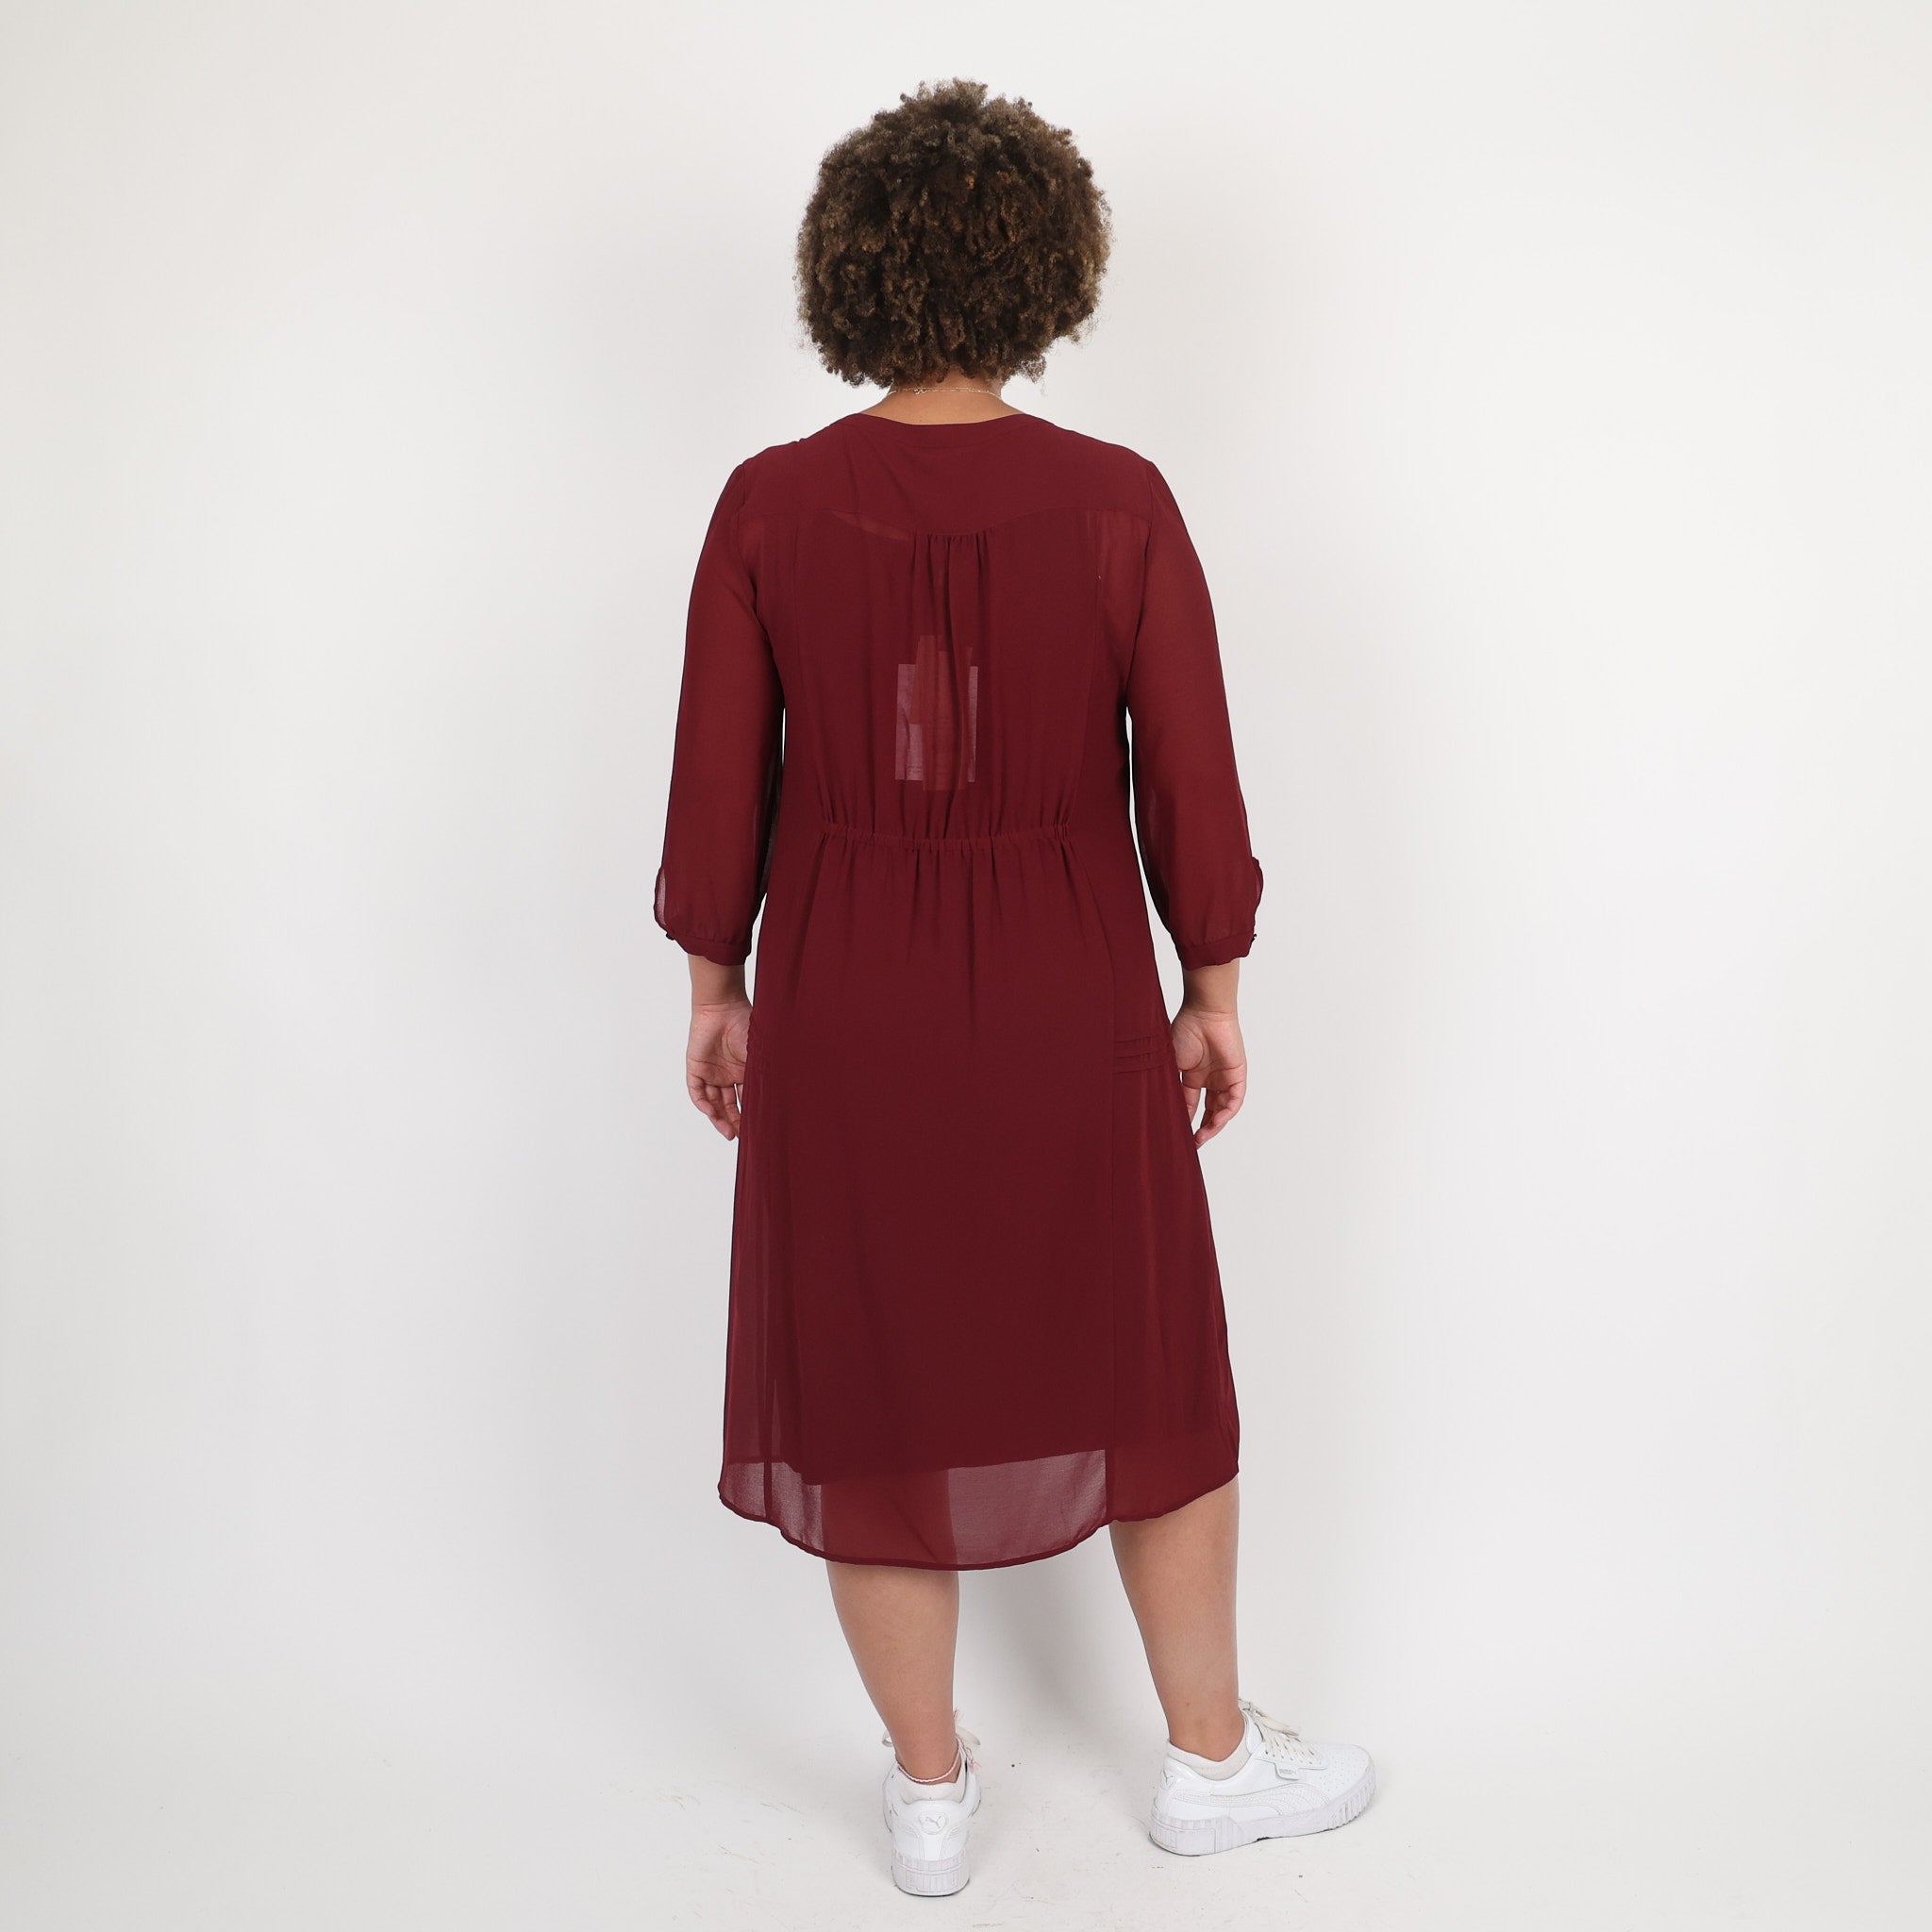 Dress, UK Size 14